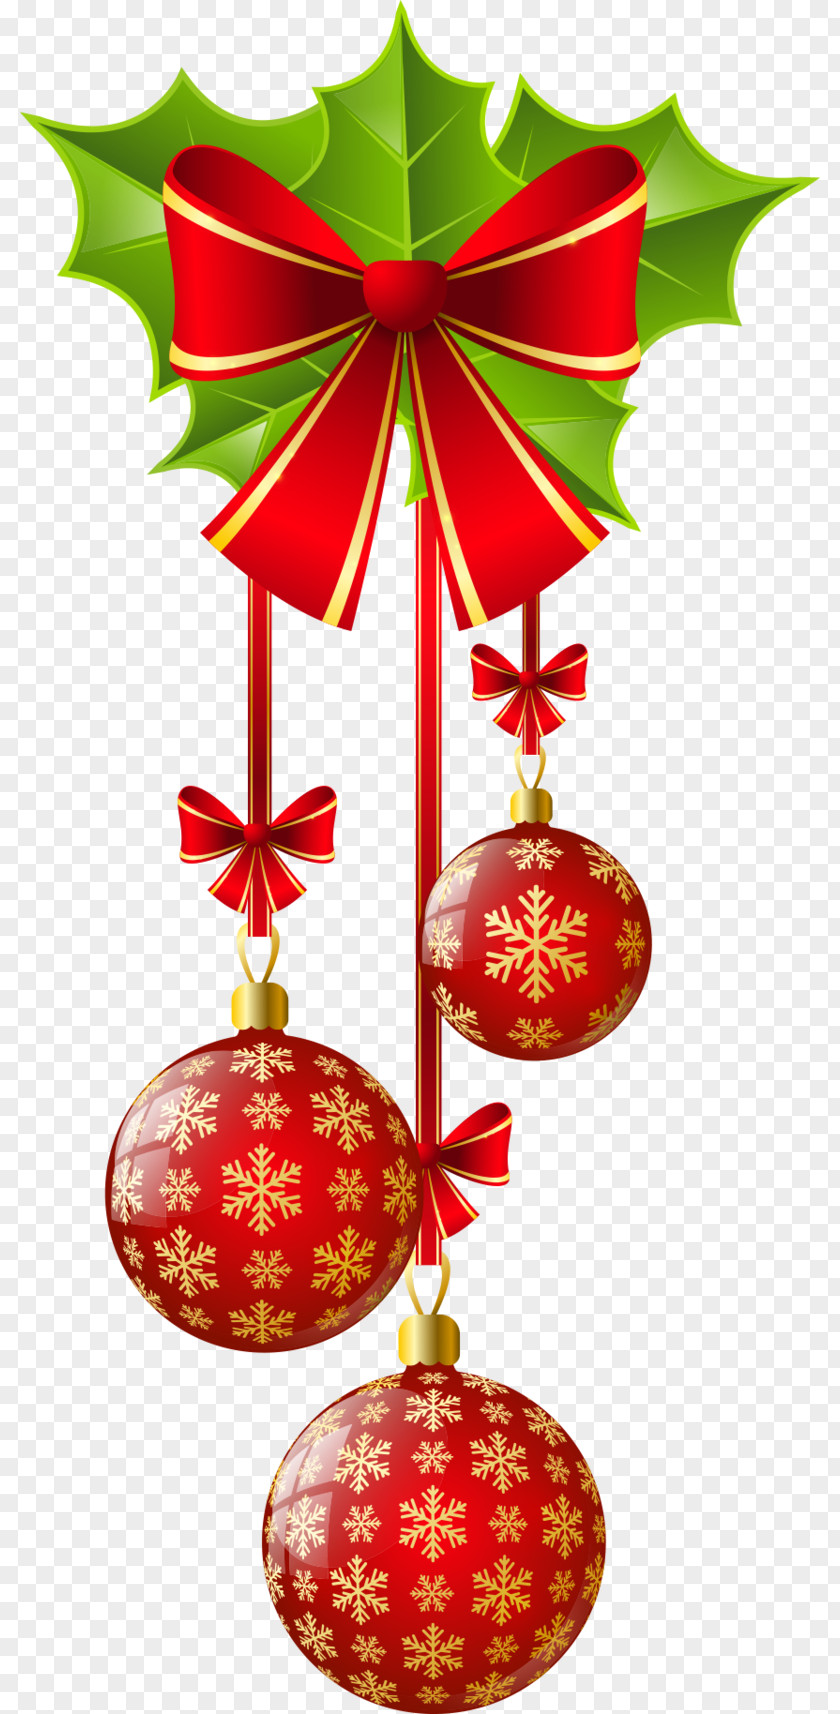 Santa Claus Clip Art Christmas Ornament Day Decoration PNG